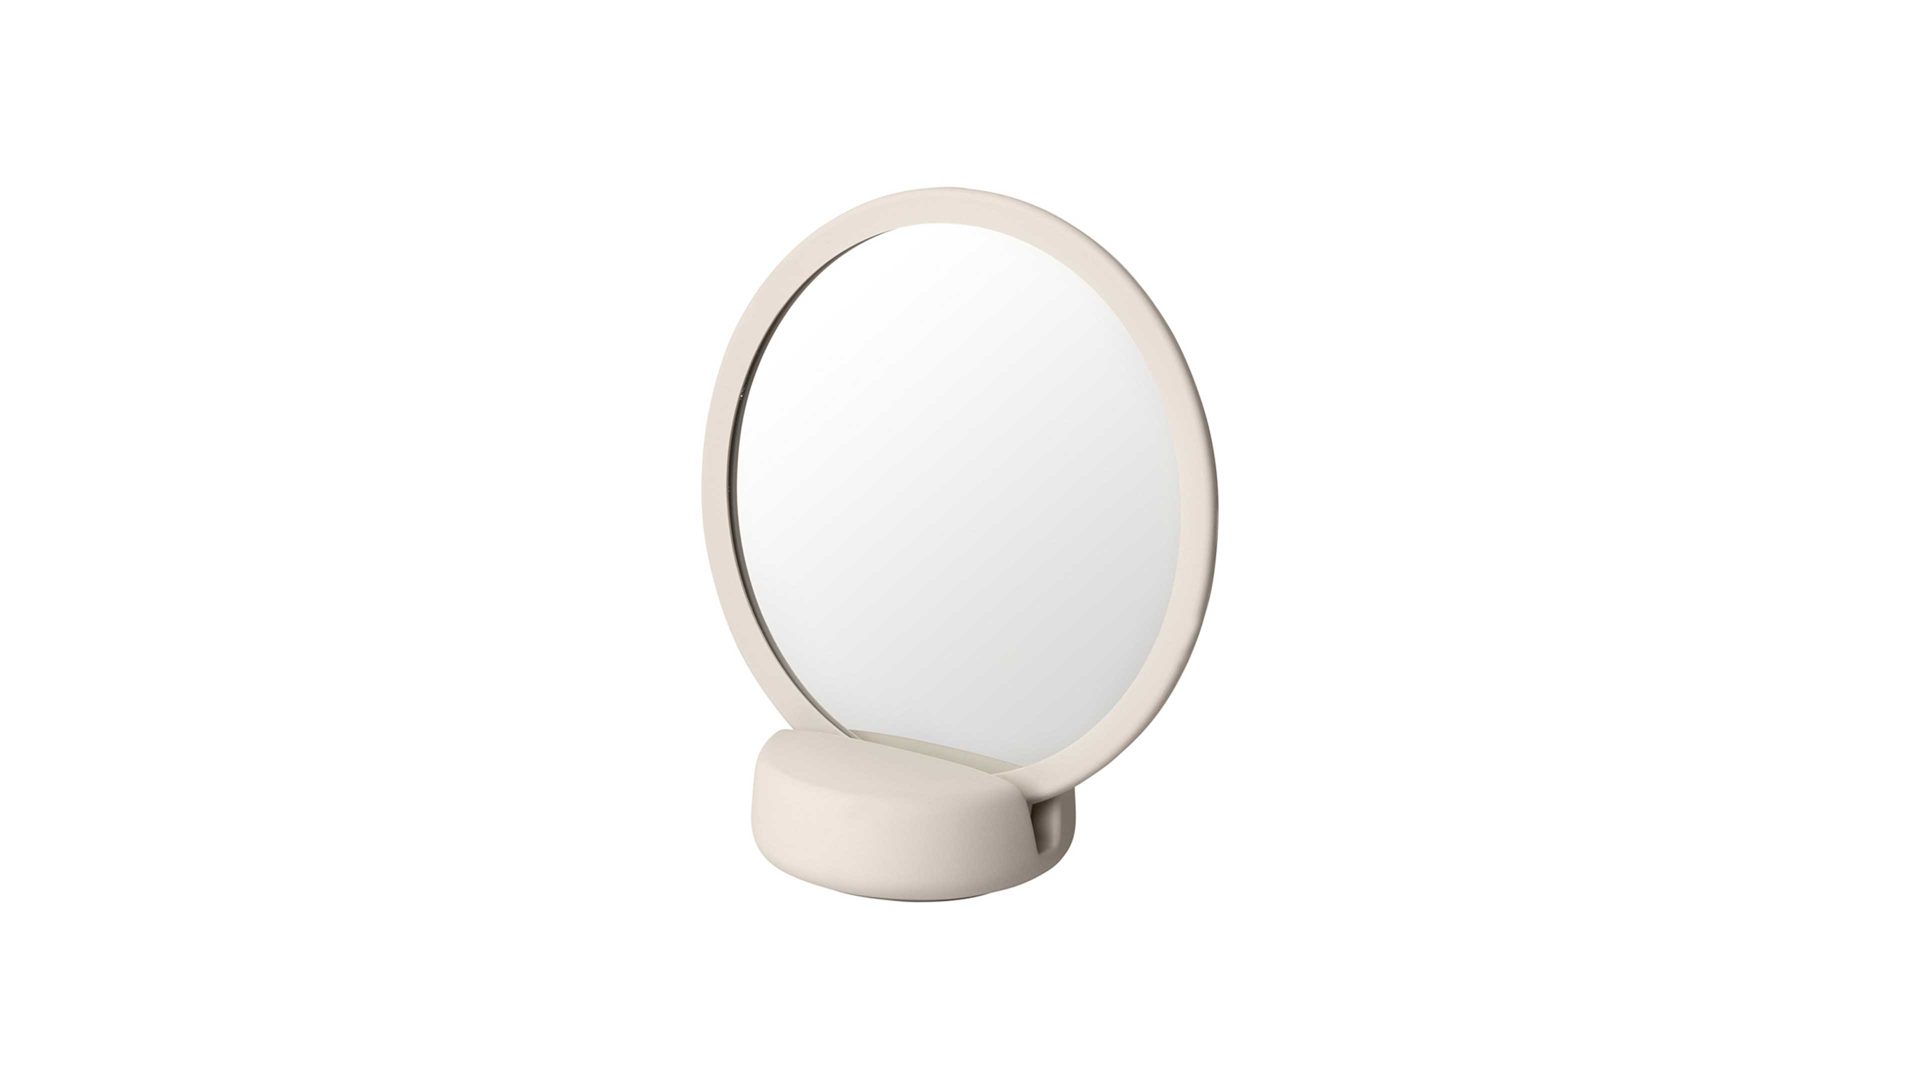 Kosmetikspiegel Blomus aus Keramik in Beige blomus Kosmetikspiegel Sono cremeweiße Keramik – Höhe ca. 19 cm